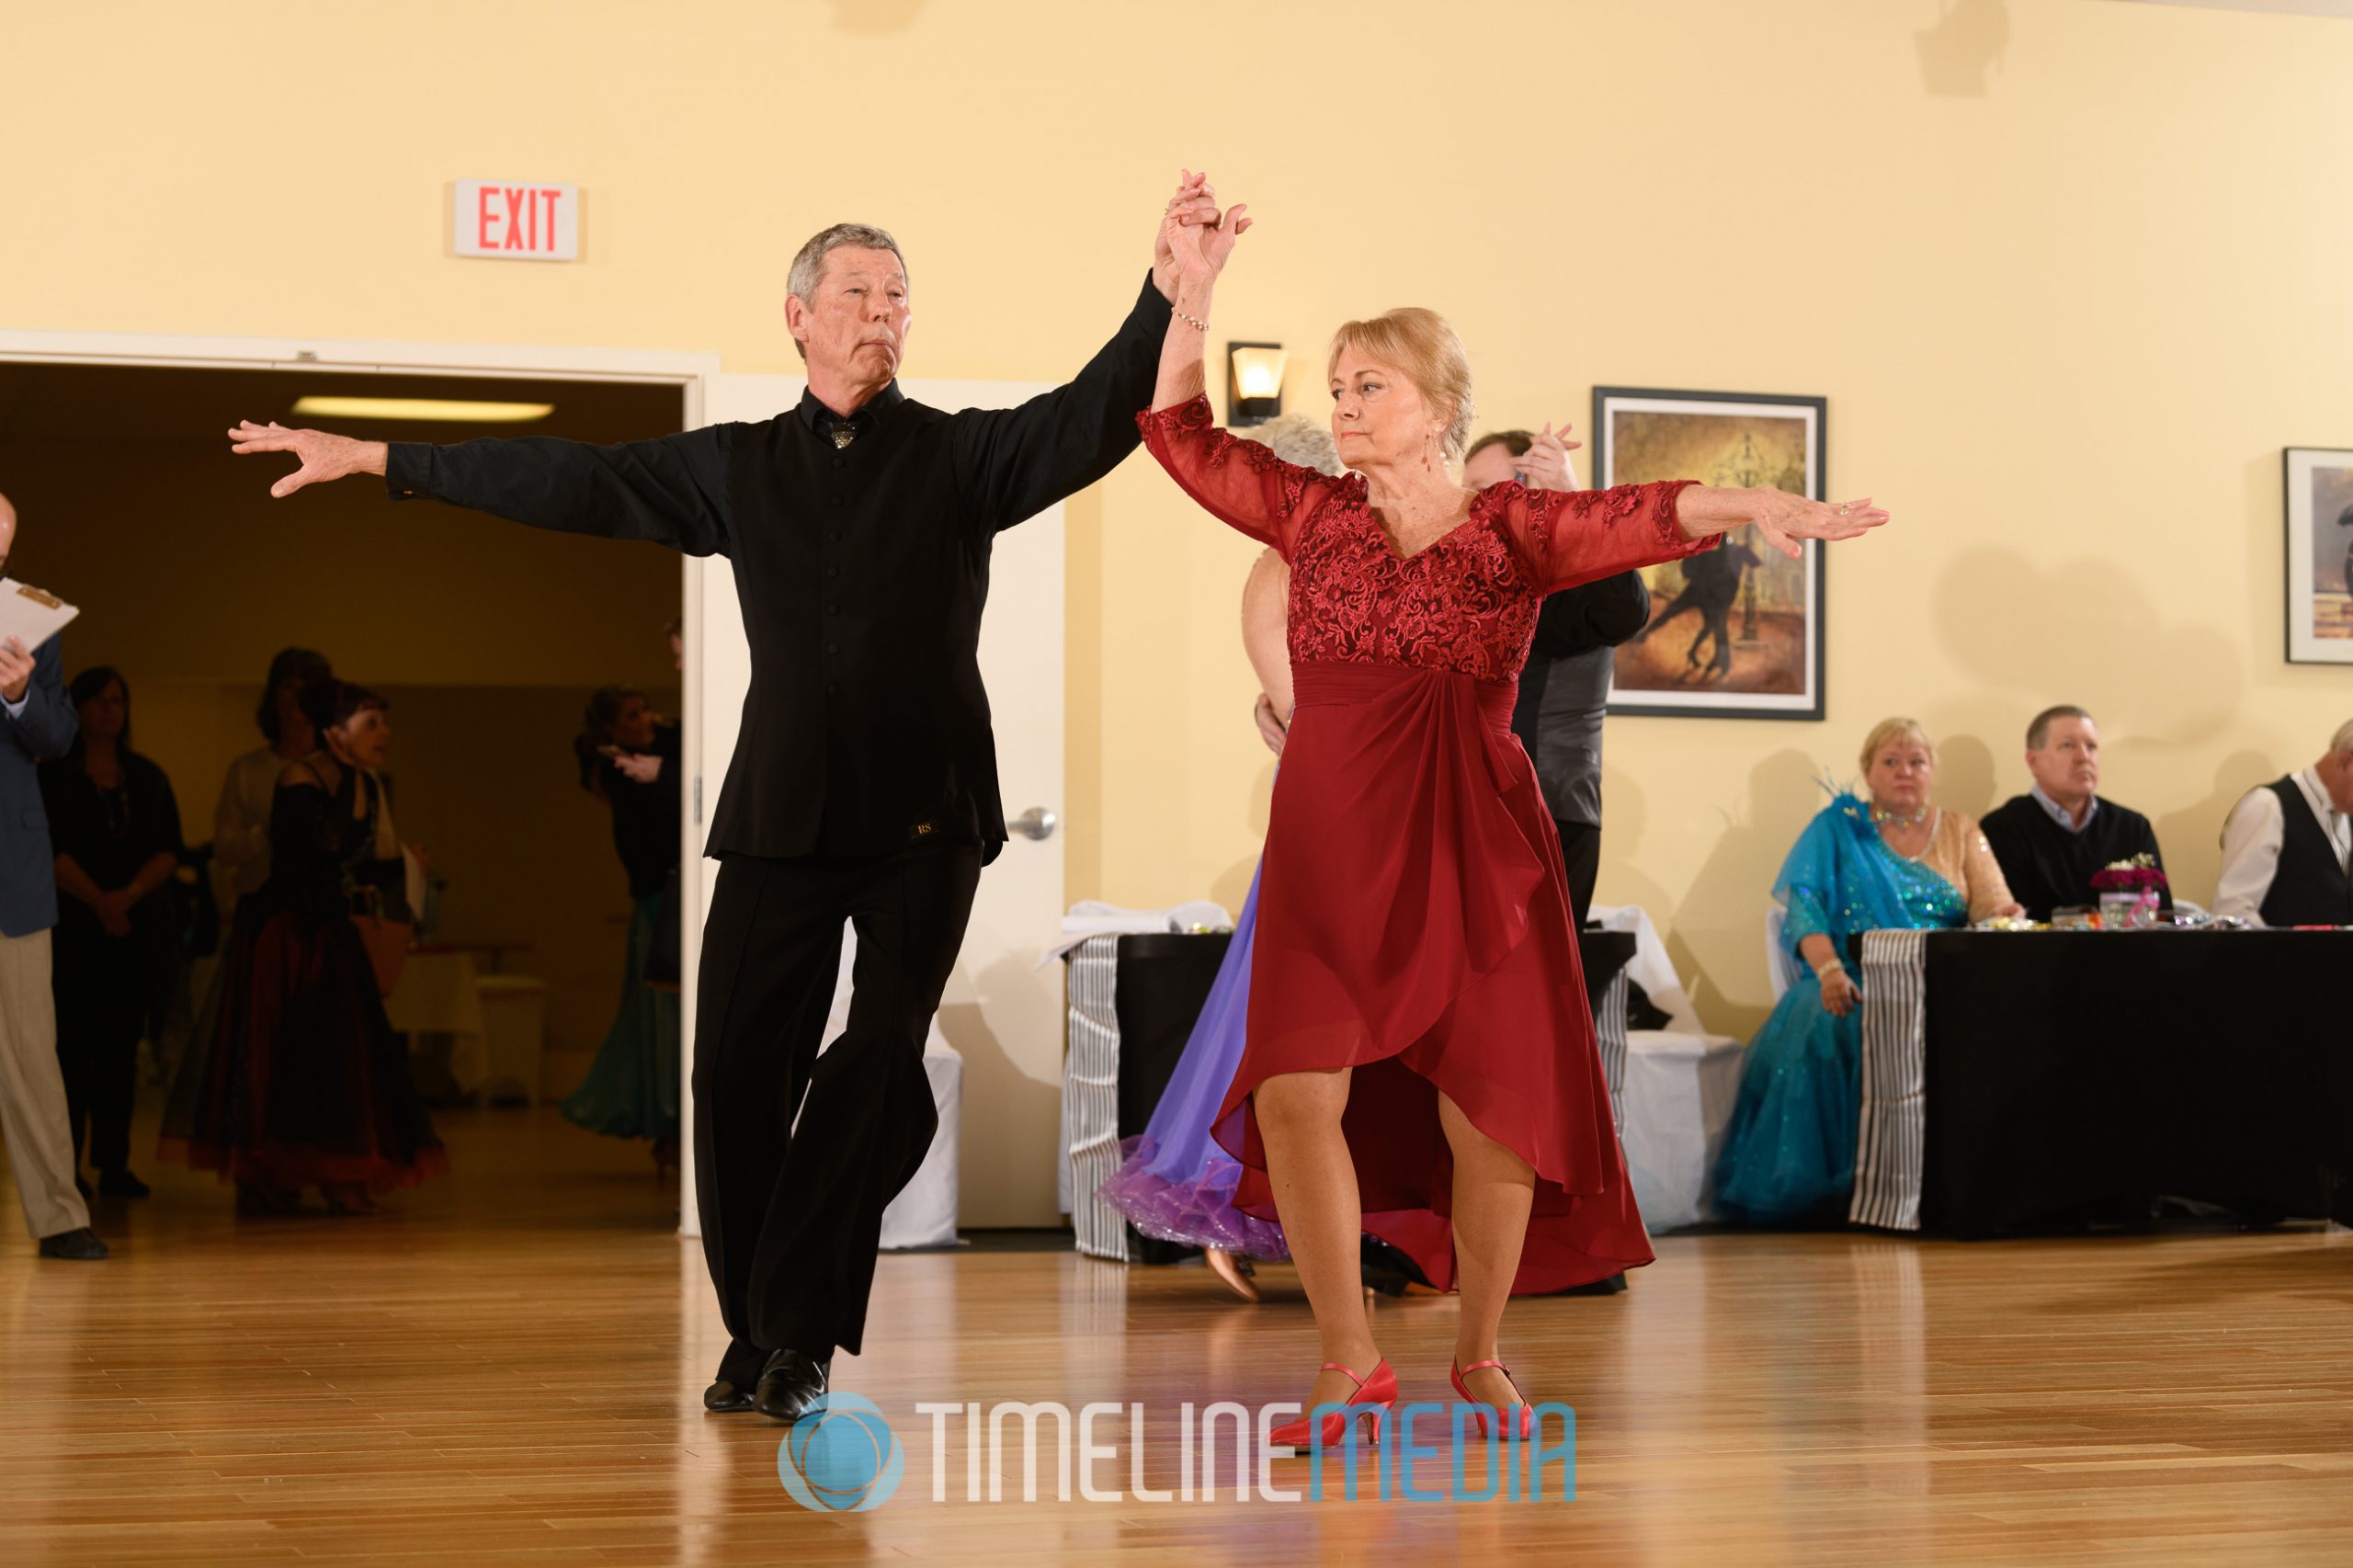 Lee at River City Ballroom Dance Competition ©TimeLine Media